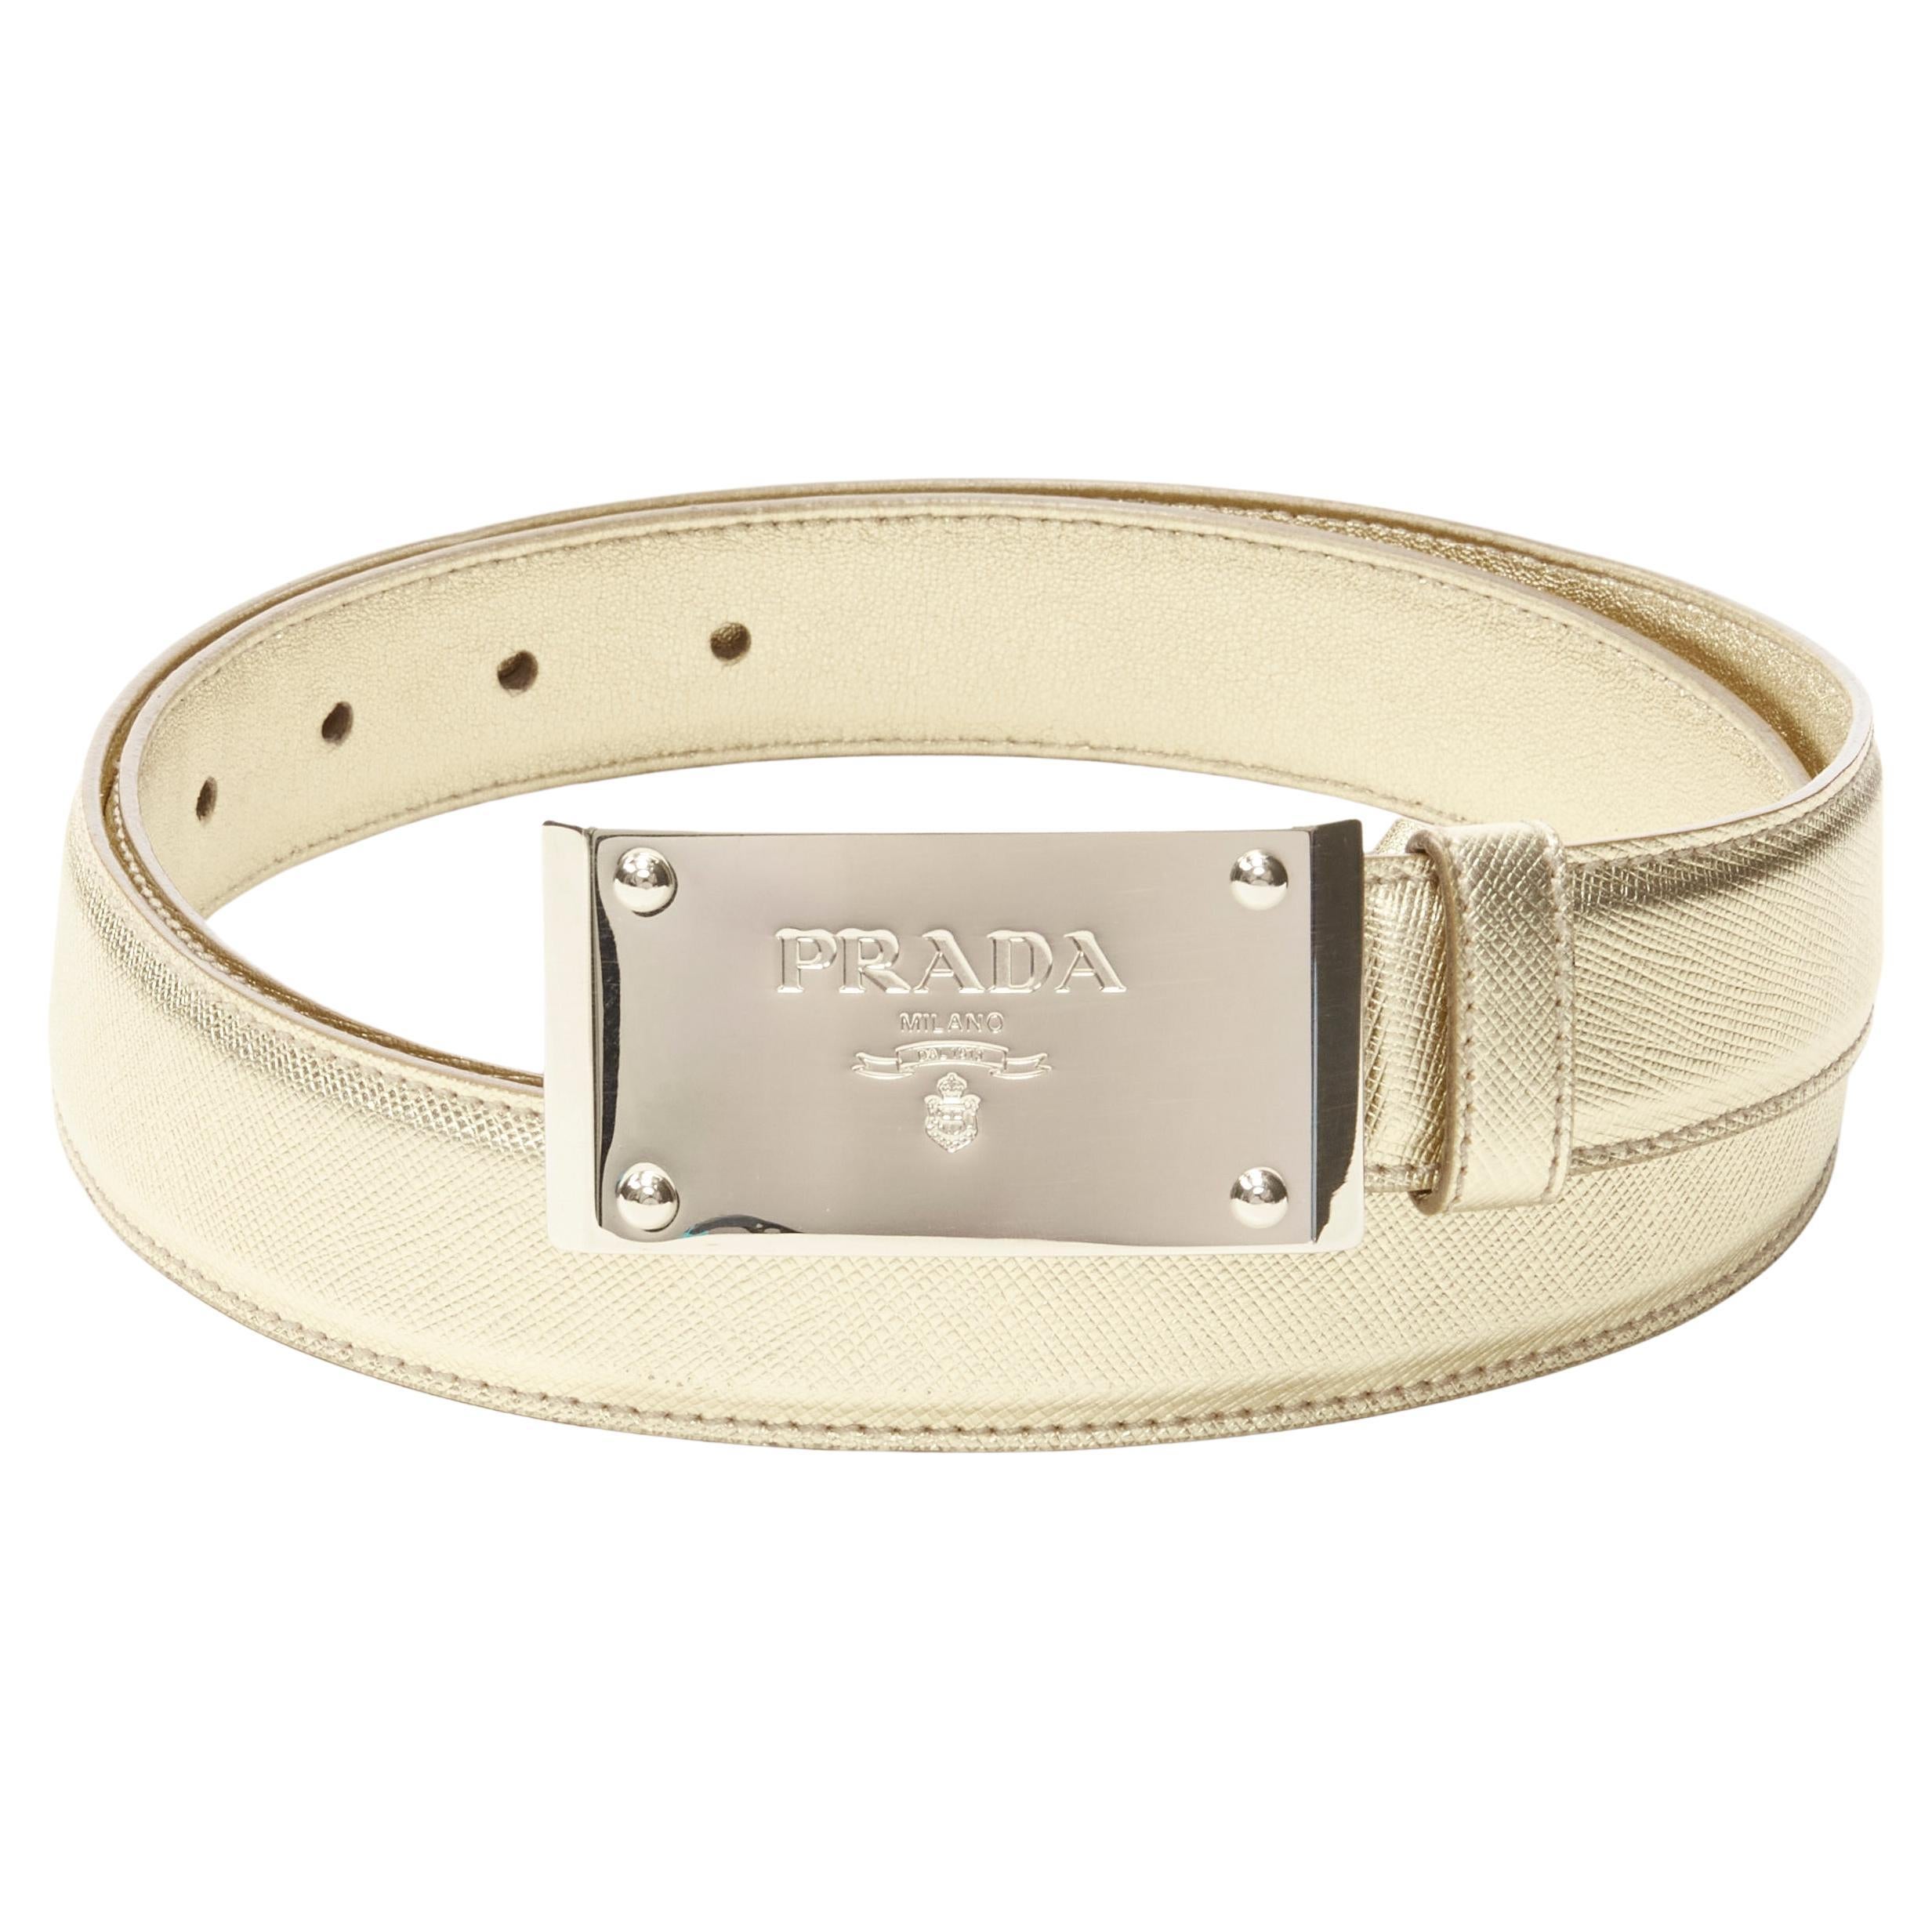 PRADA logo emboss metal buckle champagne gold saffiano leather belt 90cm  36